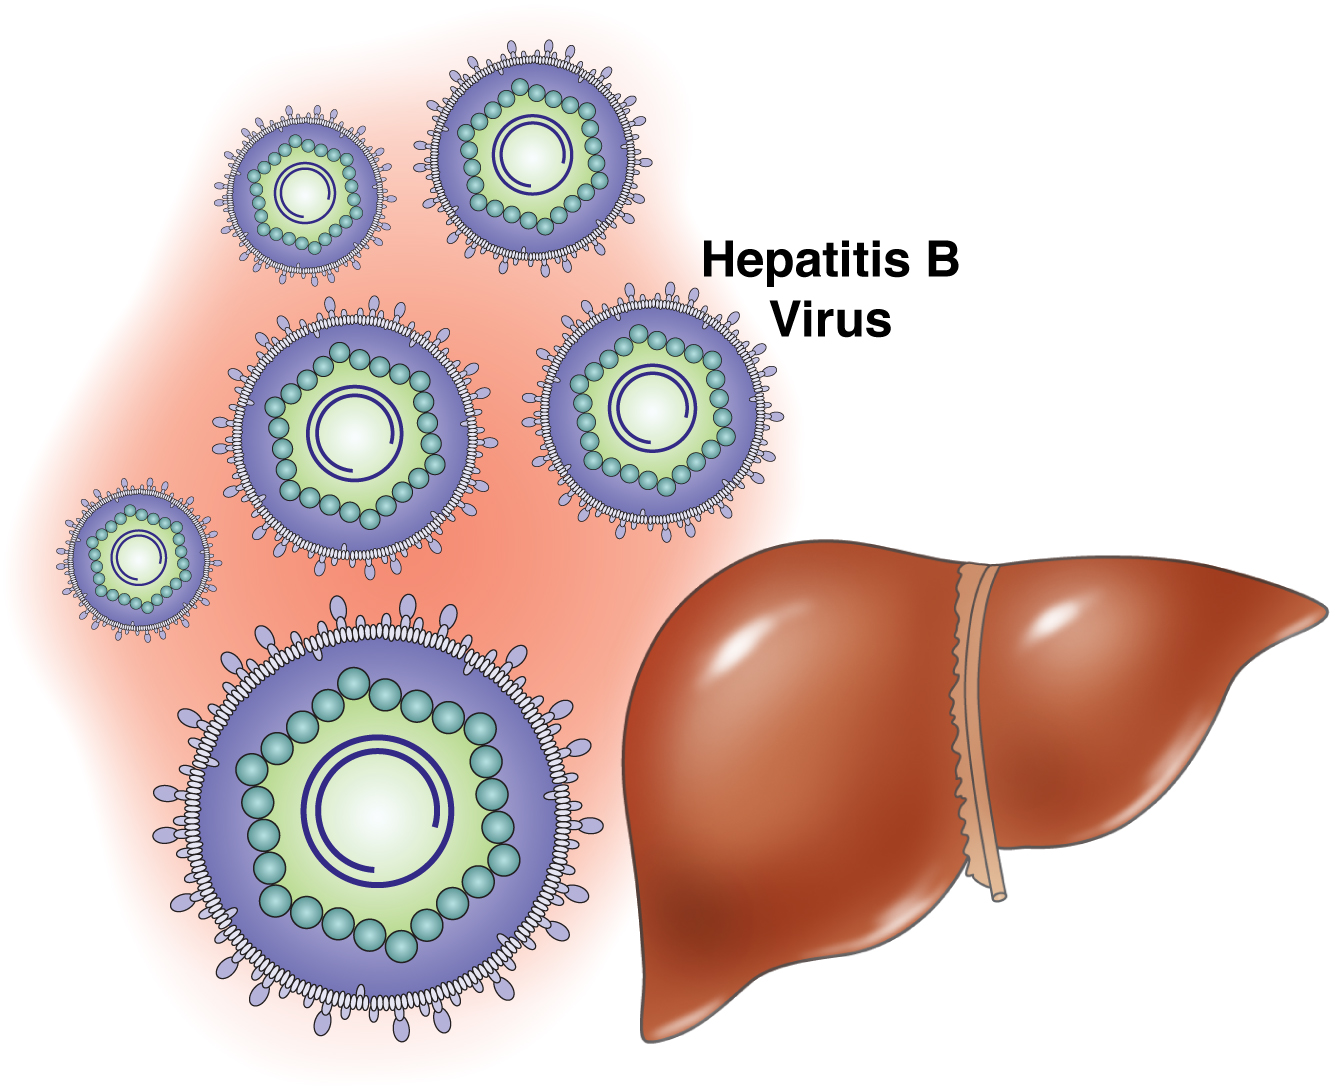 hepatitis b images